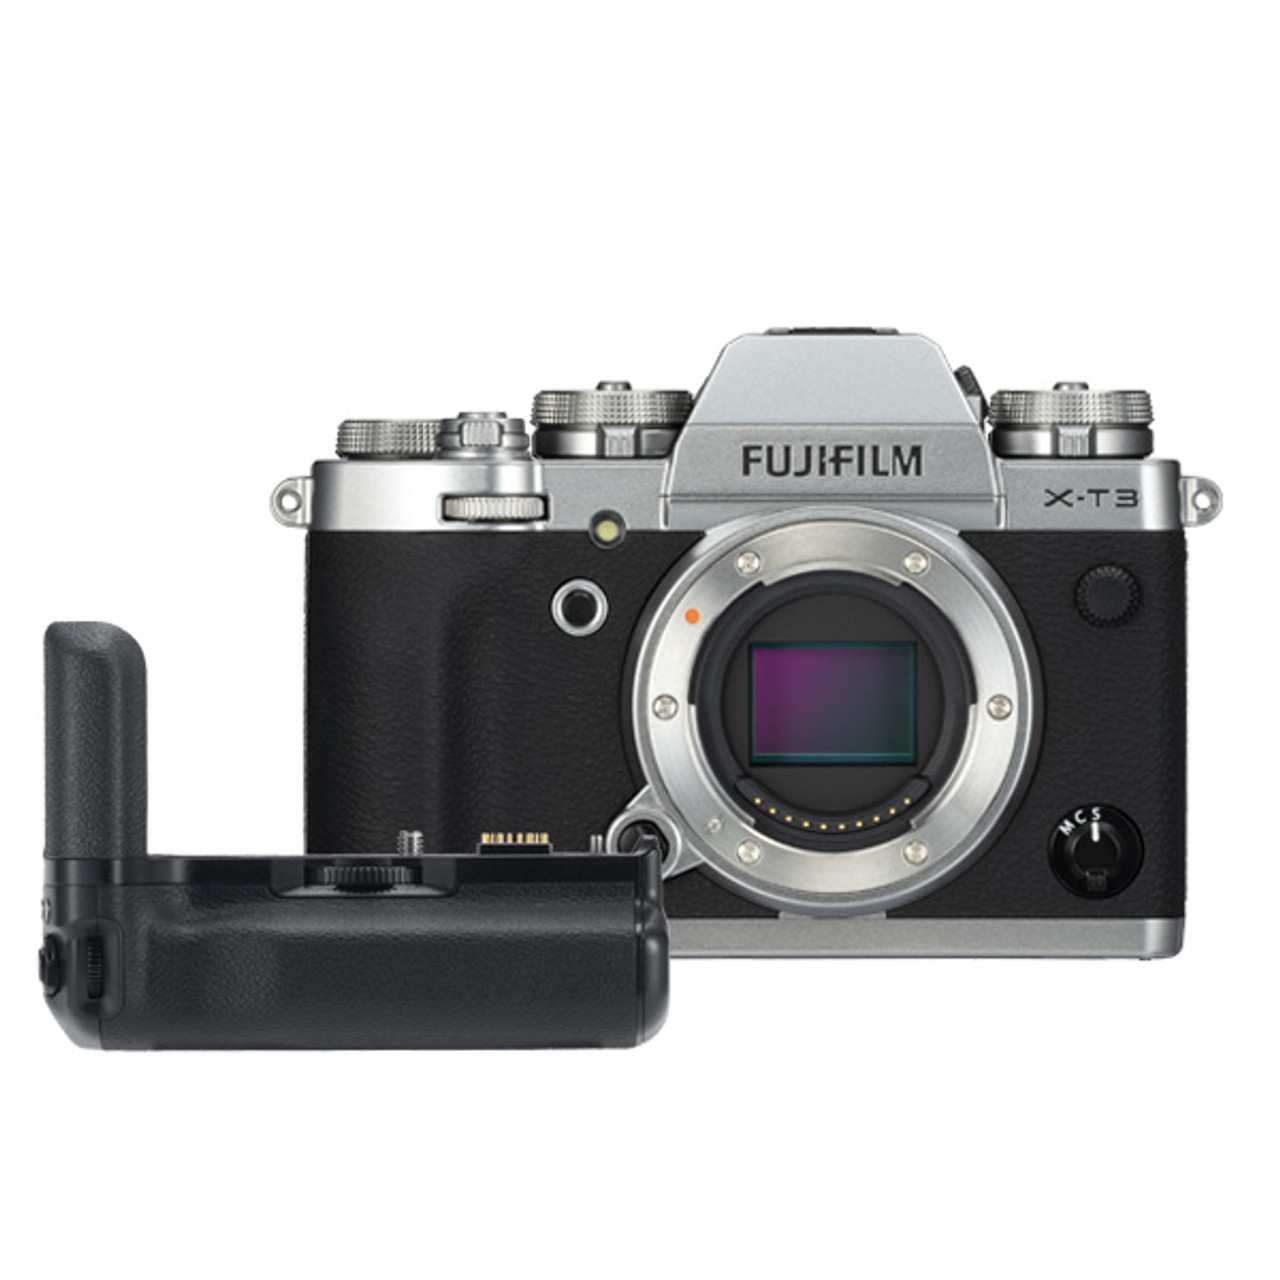 Fujifilm X-T3 Silver Body with Vertical Battery Grip (VG-XT3)